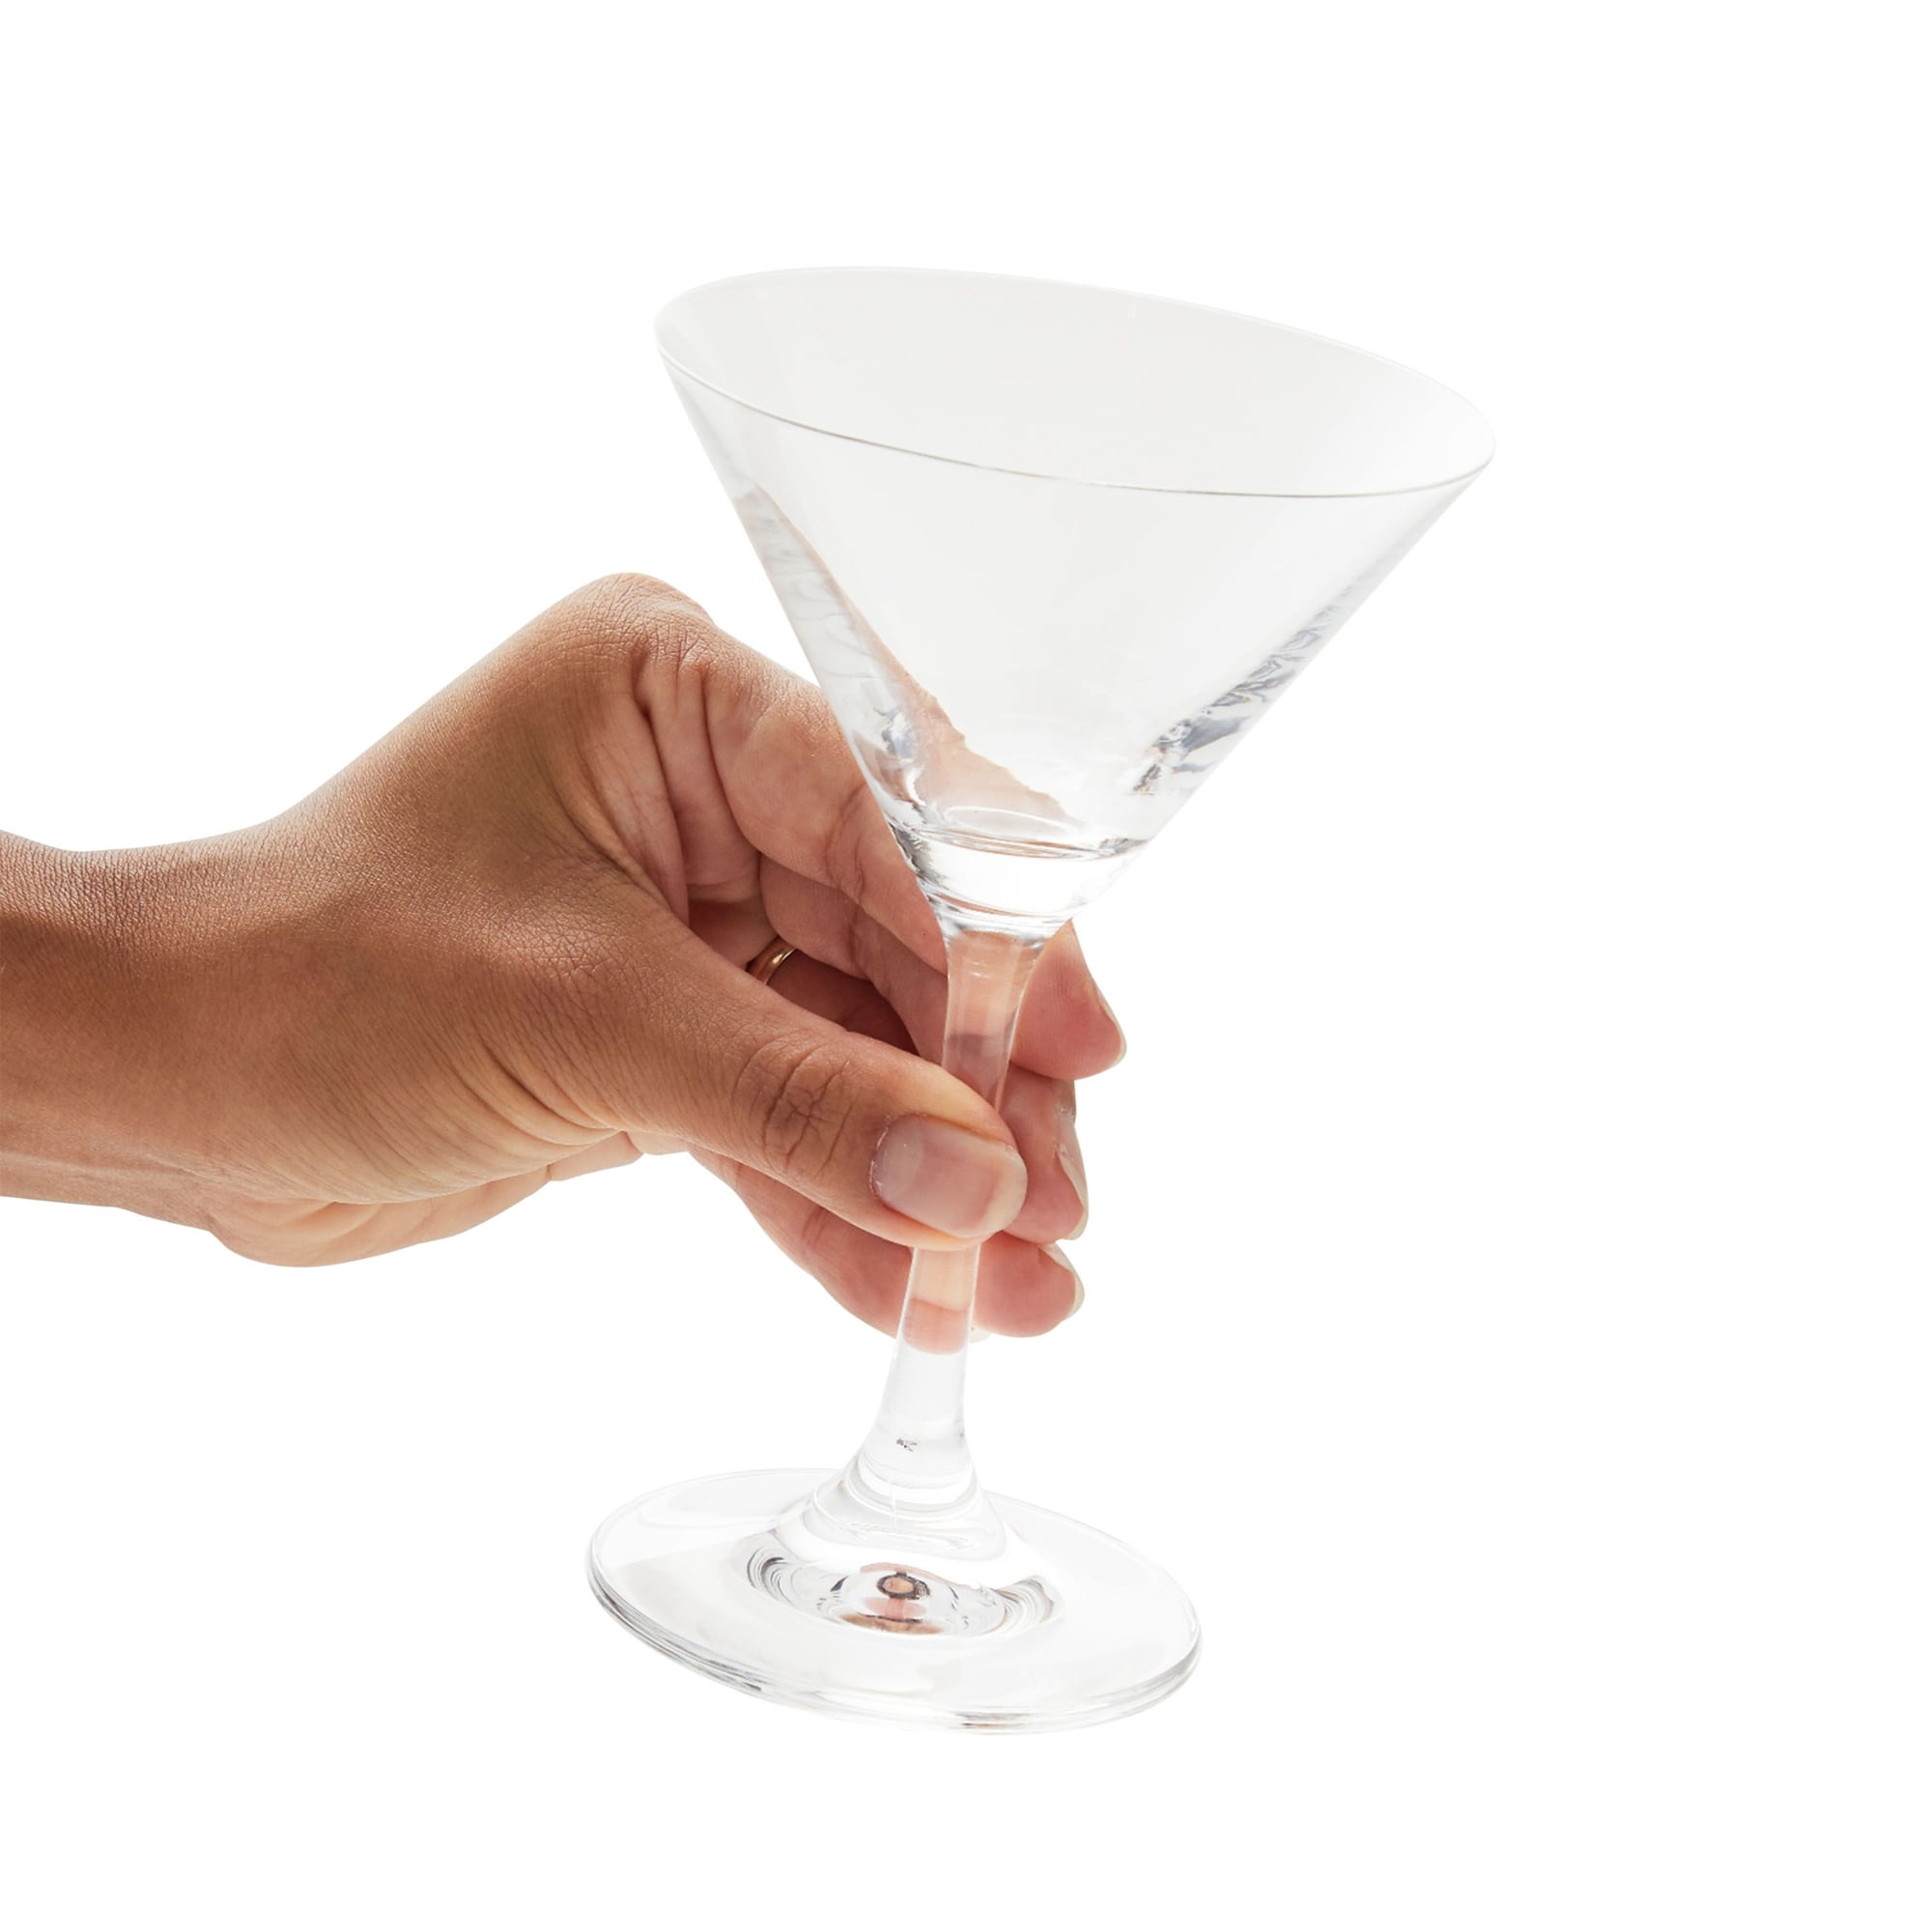 VENVENWEAVS Martini Glasses Set of 8,Hand-blown Stemless Crystal Martini  Glasses And Bar Jigger in G…See more VENVENWEAVS Martini Glasses Set of